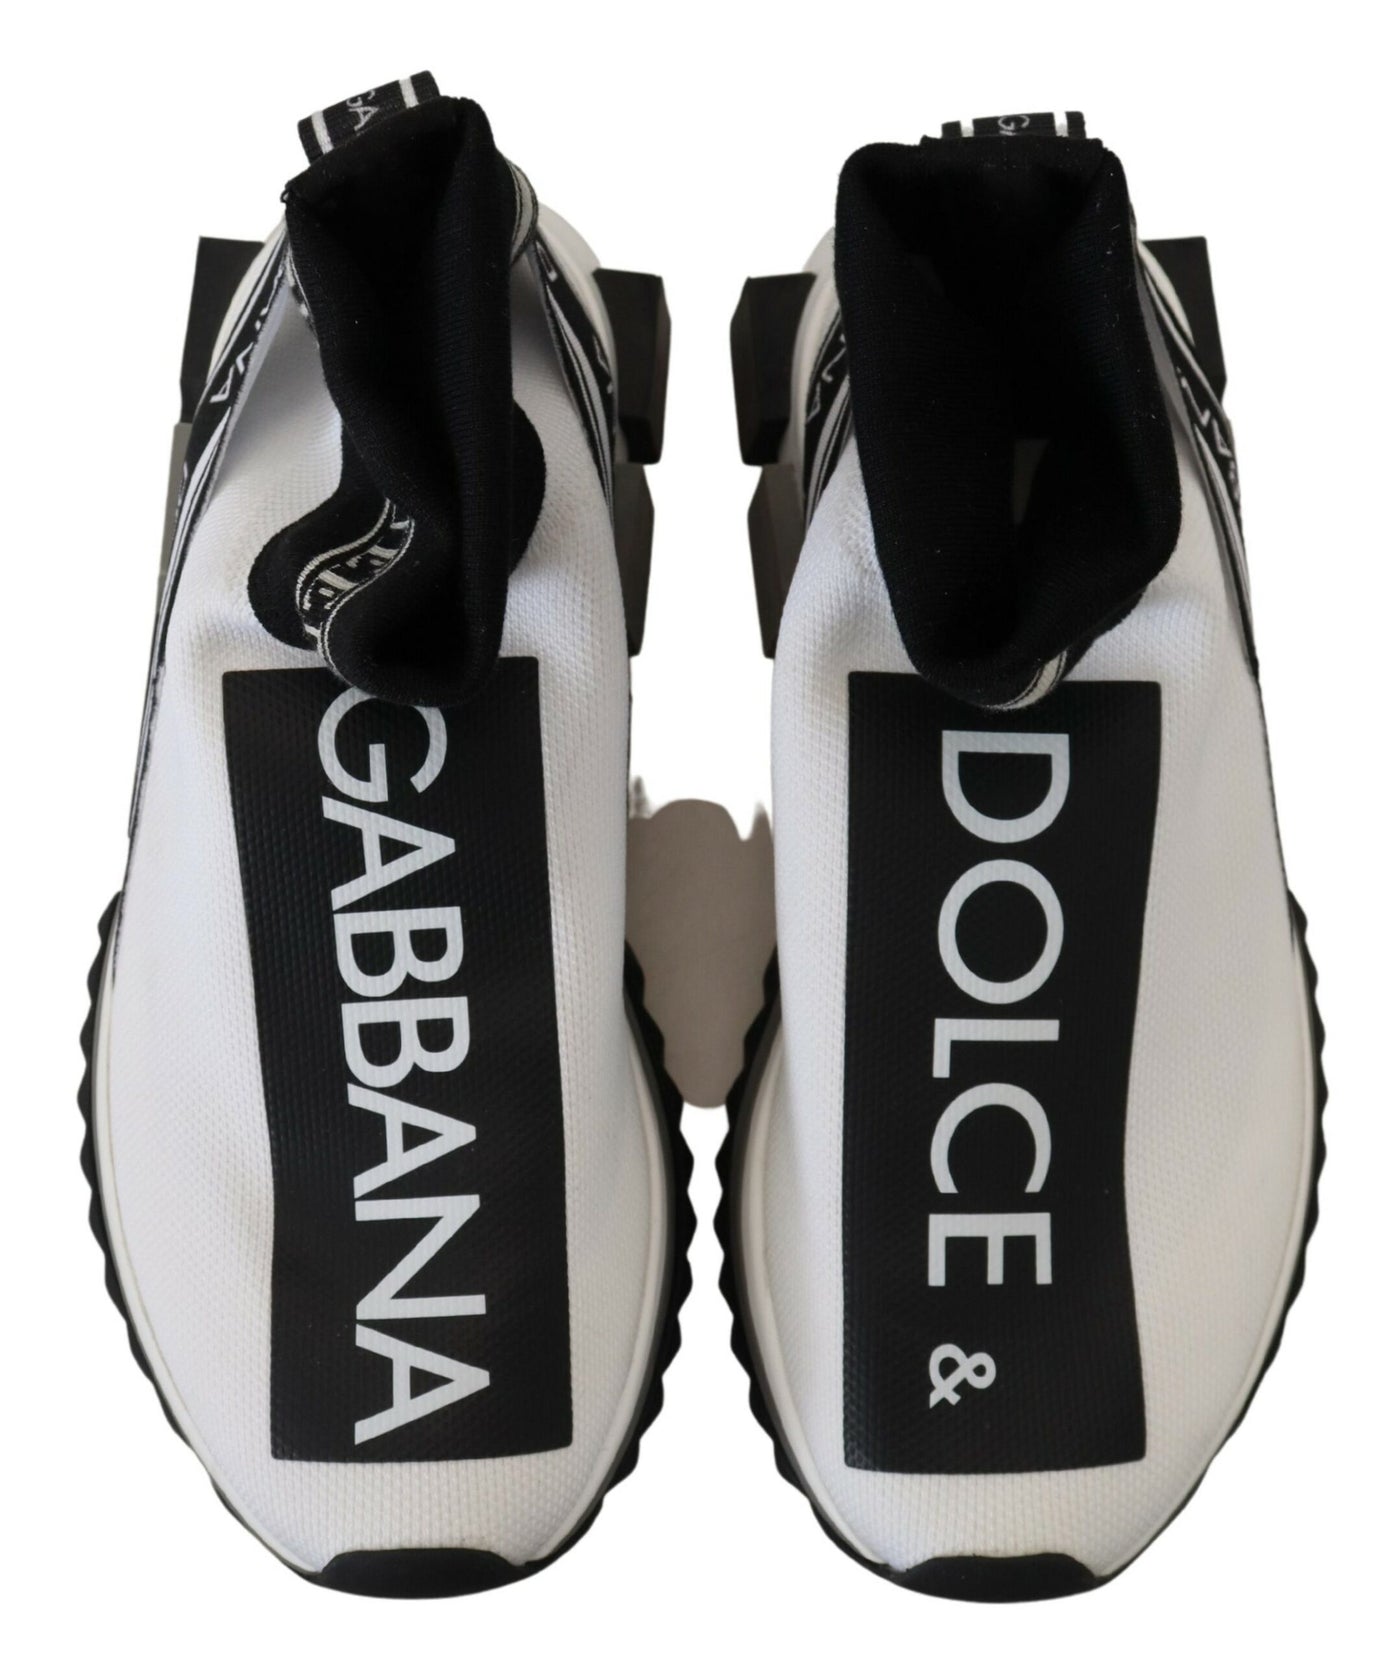 White Black Sorrento Socks Sneakers Shoes